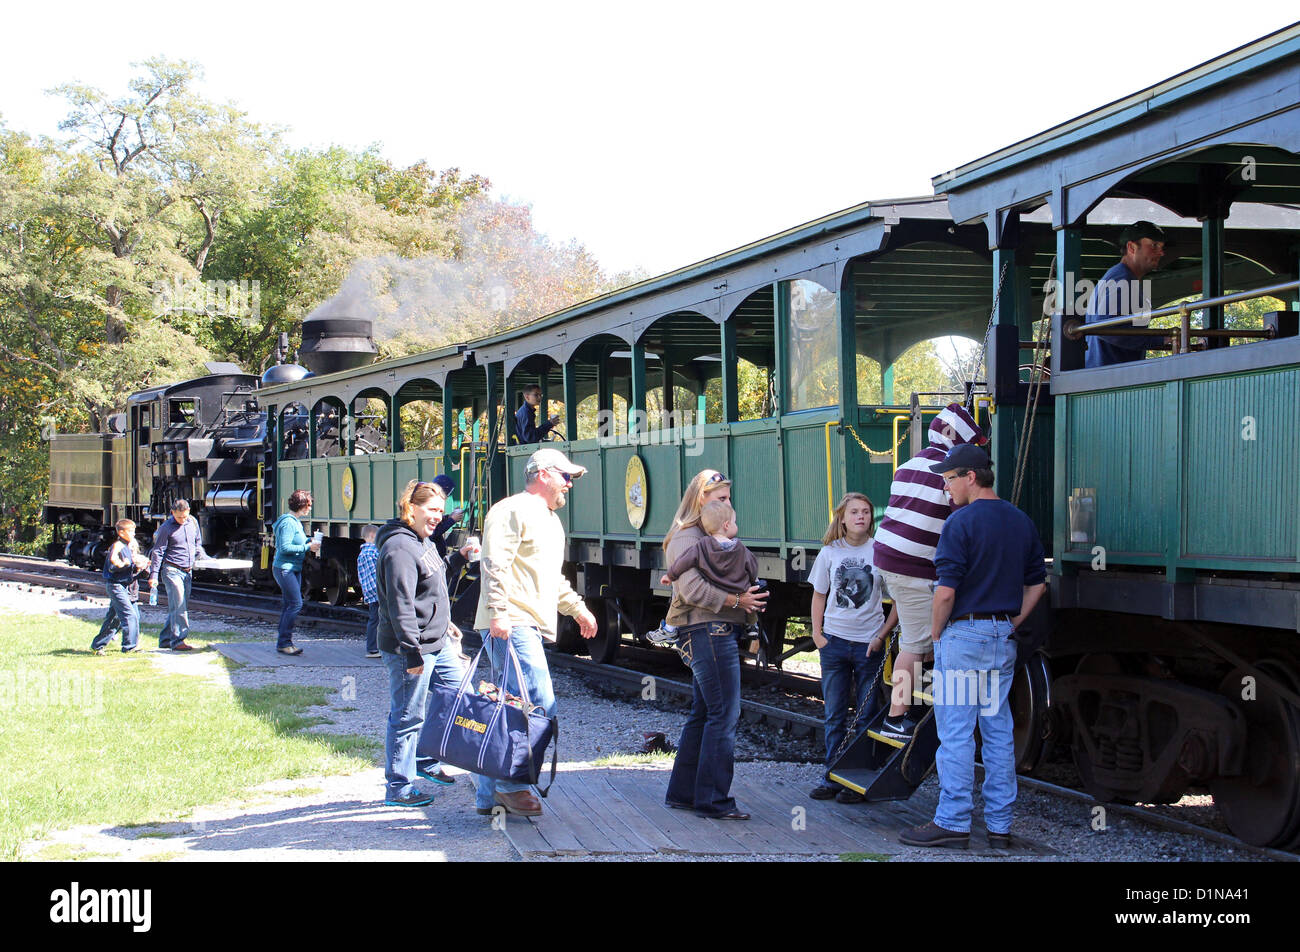 Cass Scenic Railroad State Park, West Virginia, USA Stockfoto